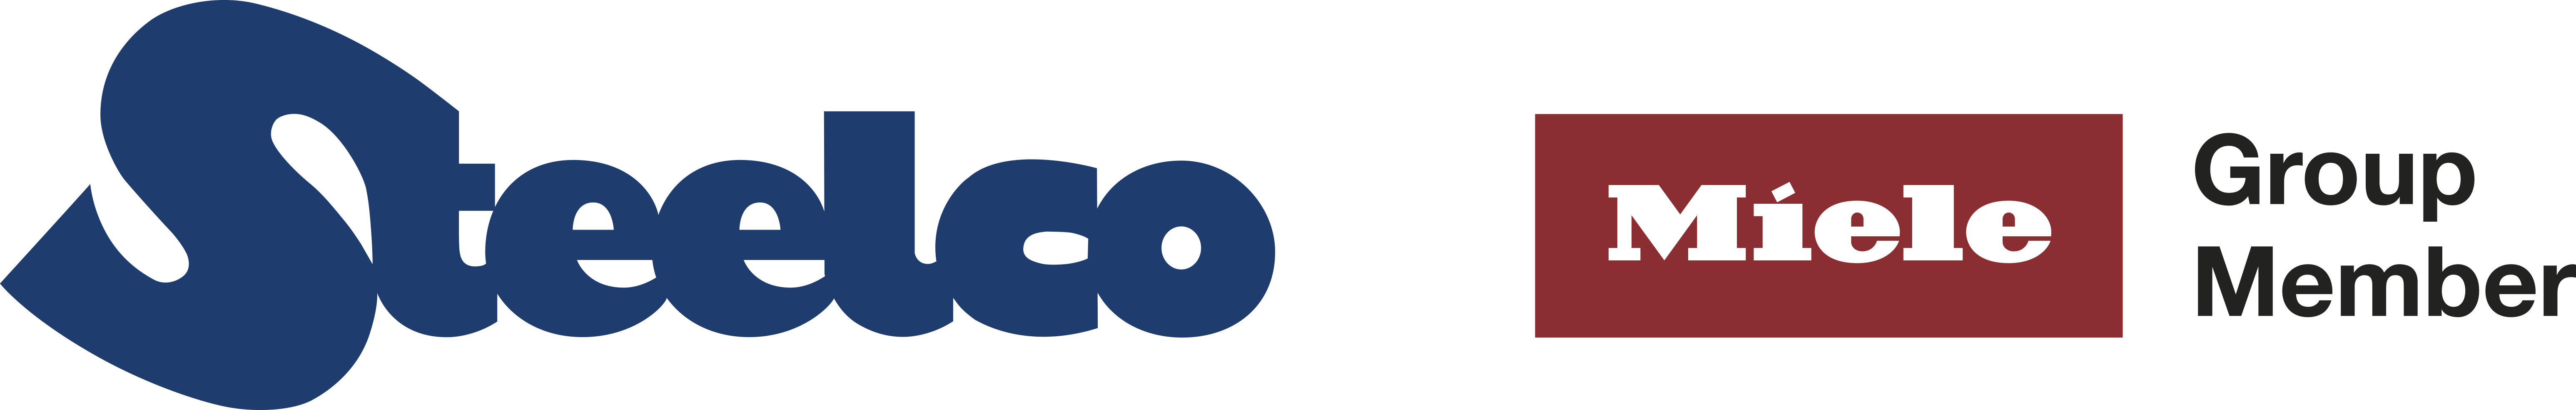 Logo Steelco Pantone 654C + MIELE Group Member